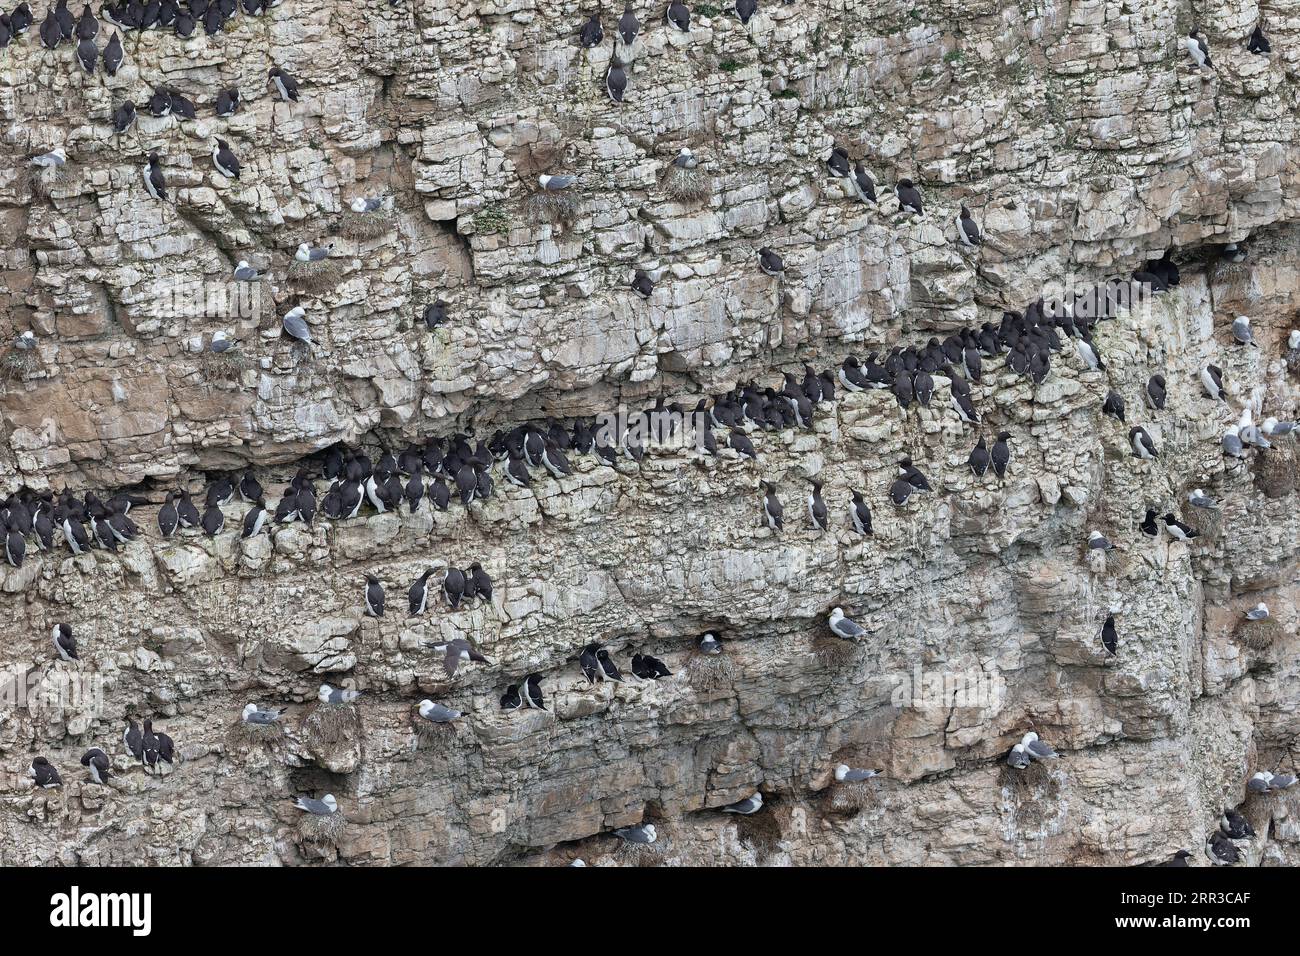 Guillemot (Uria aalge) reihte sich am Cliffs Yorkshire GB im Juni 2021 DxO 300dpi.jpg Bild-ID: 2RR3C8E an Stockfoto